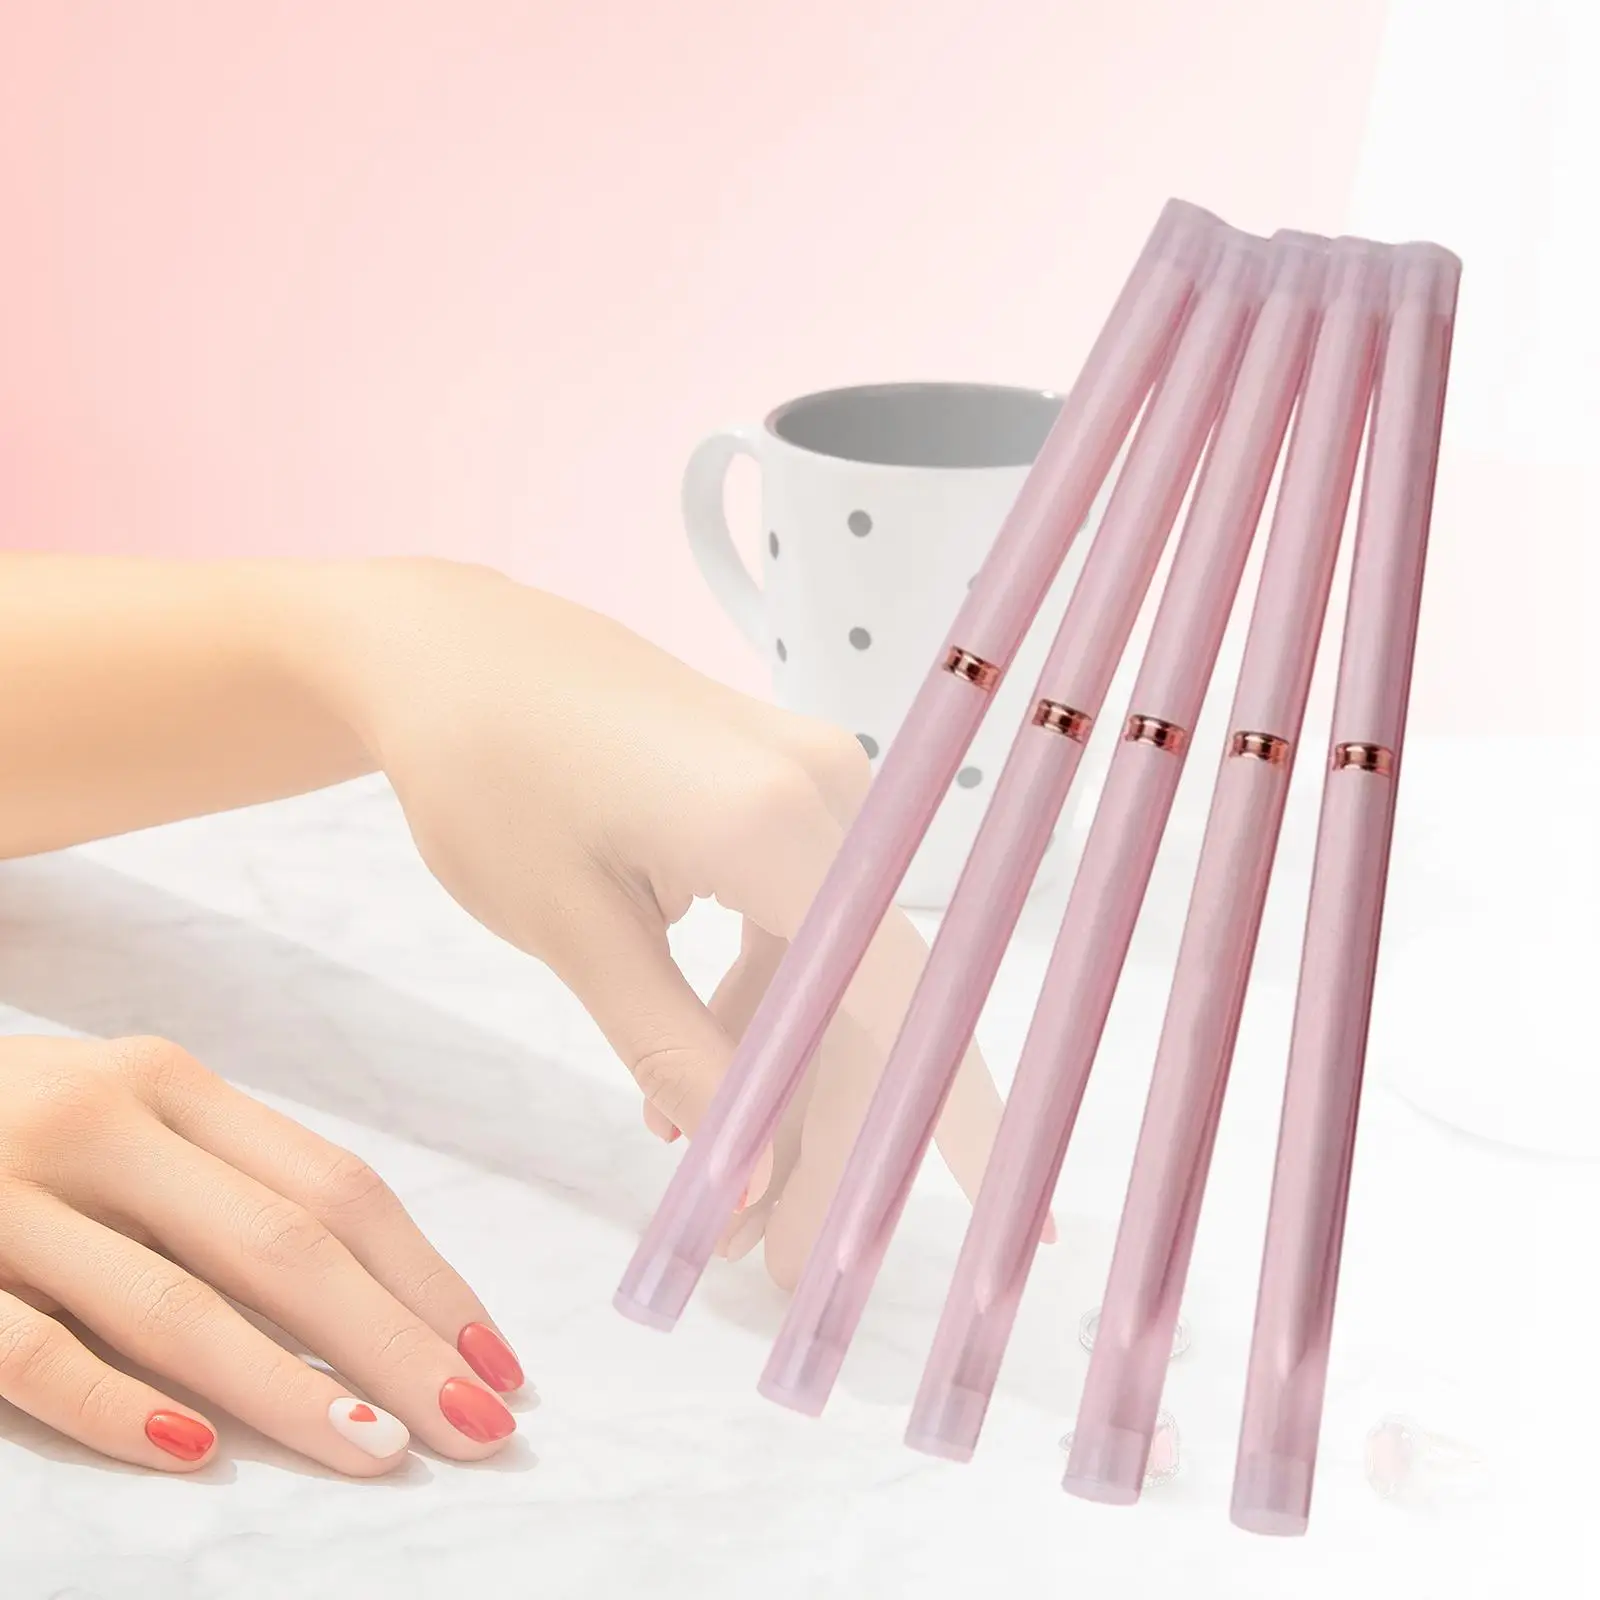 5x Nail Art Brushes Kit Nail Art Pens for Delicate Coloring Long Lines Elongated Lines DIY Professional Design Nail Art Design